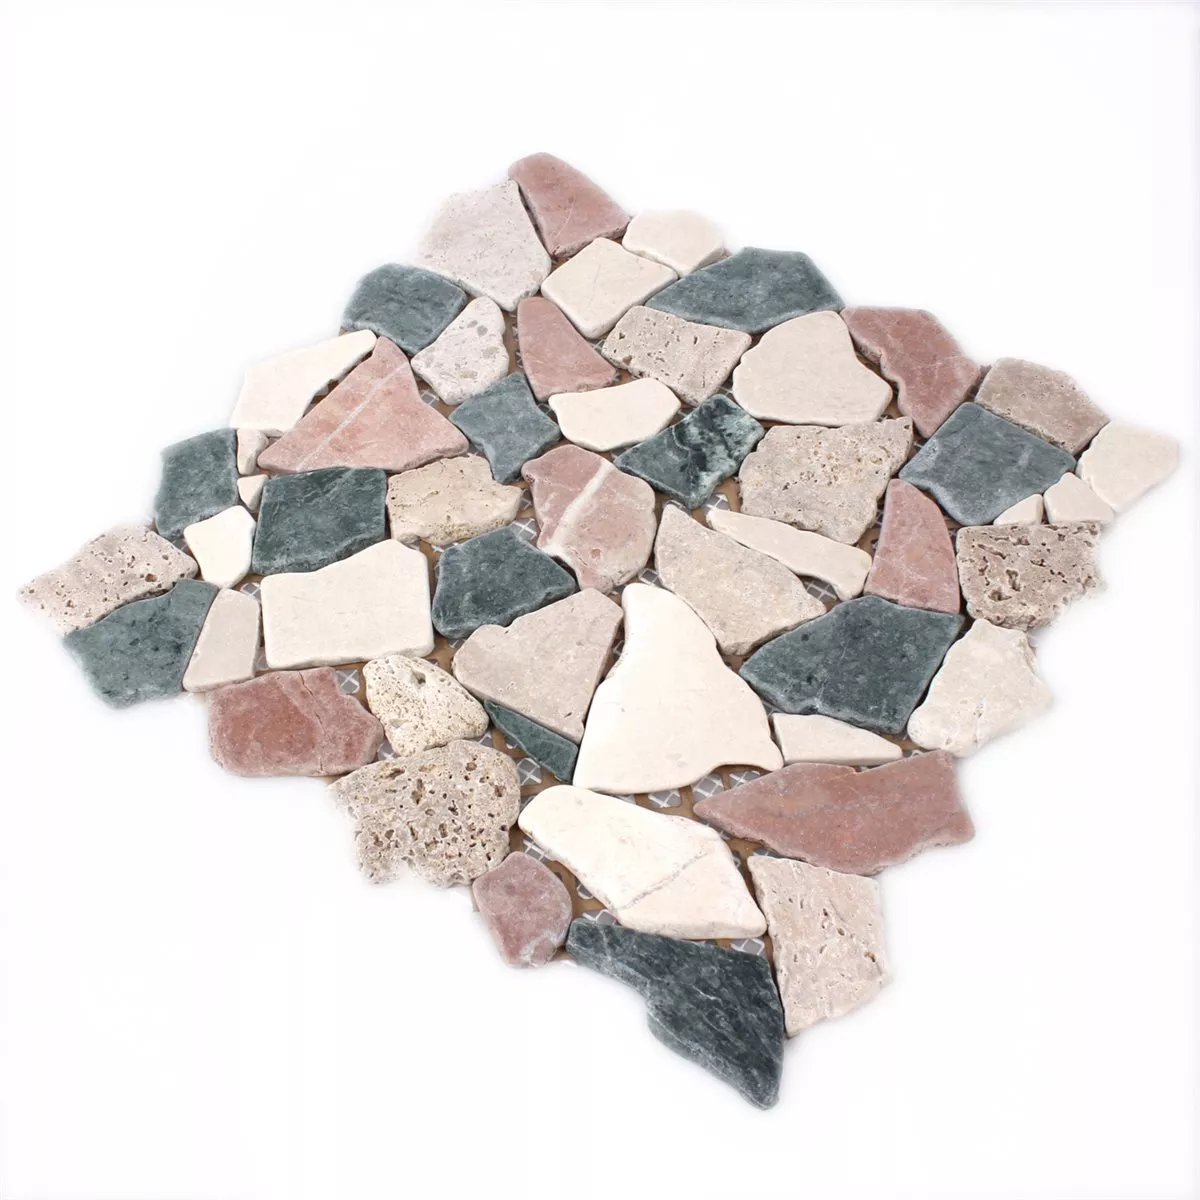 Sample Mosaic Tiles Broken Marble Multi